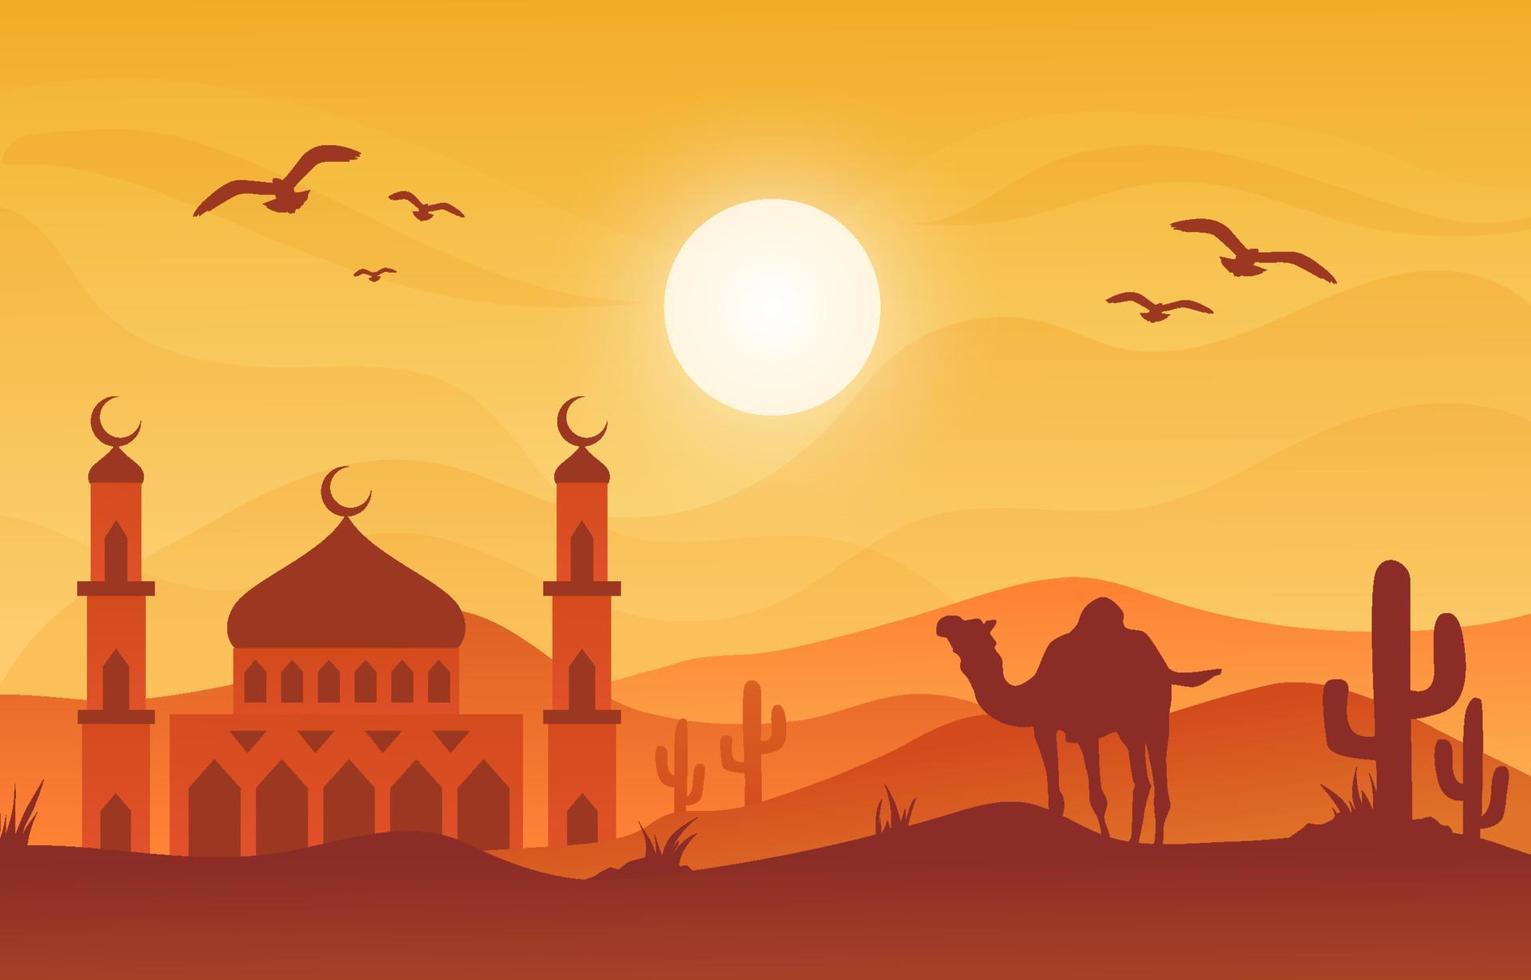 Background of Mosque Desert Gradient with Camel vector